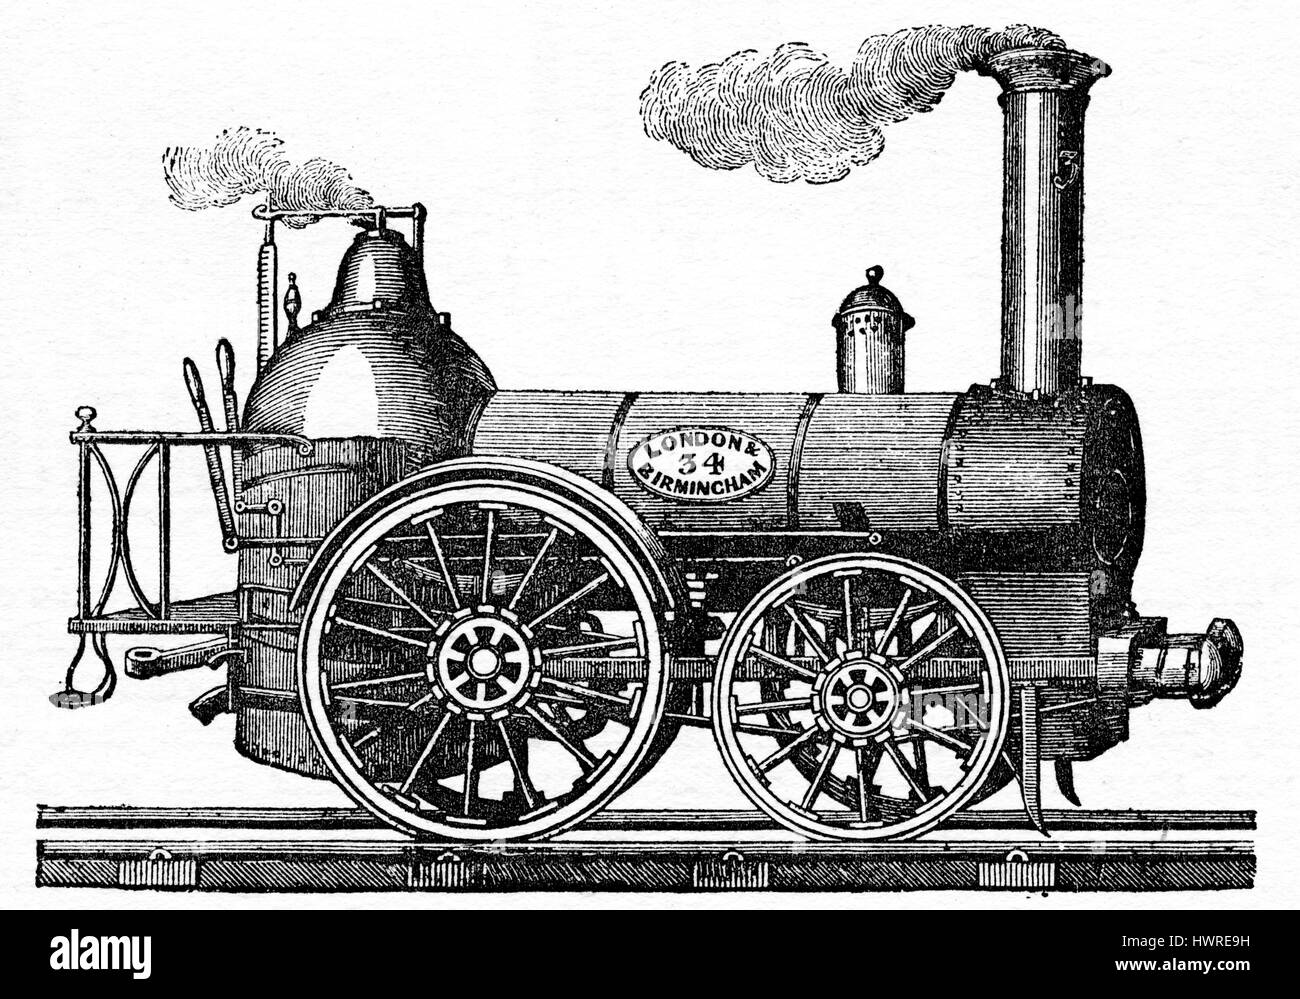 Maquina de vapor siglo xix fotografías e imágenes de alta - Alamy